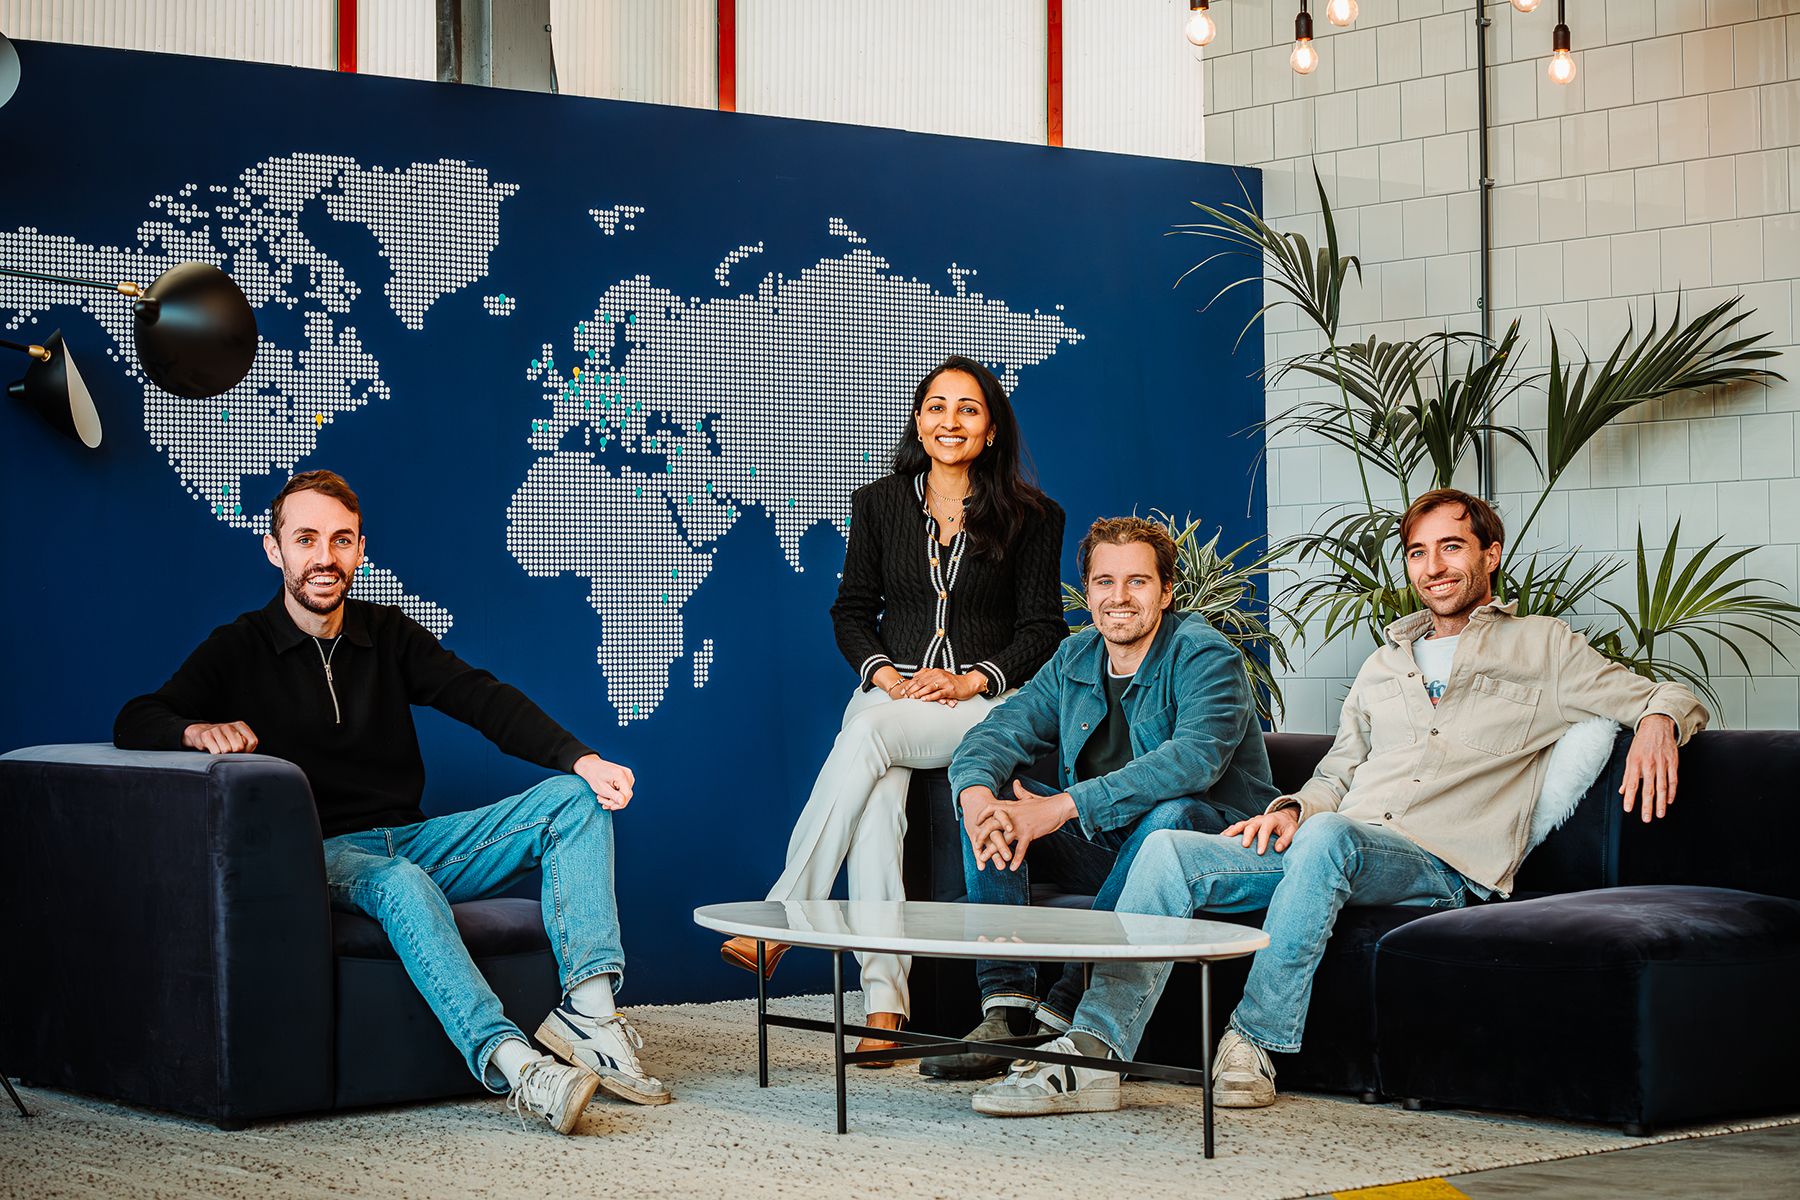 DataSnipper CEO Vidya Peters with co-founders Maarten Alblas, Jonas Ruyter and Kai Bakker